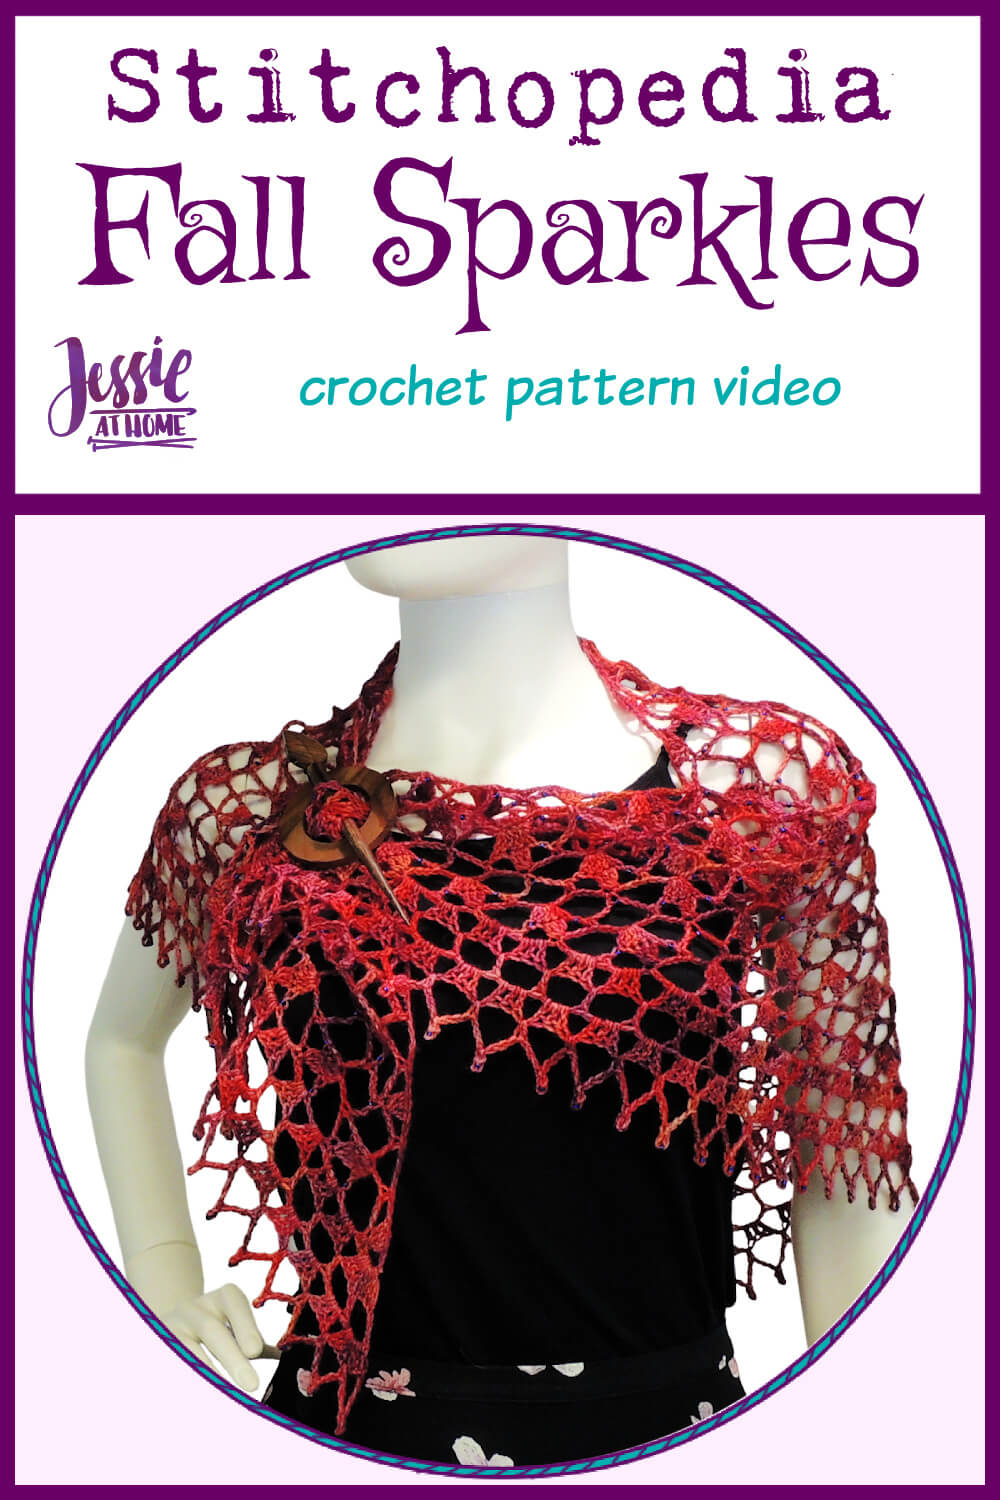 Fall Sparkles Video - beaded crochet shawl pattern tutorial